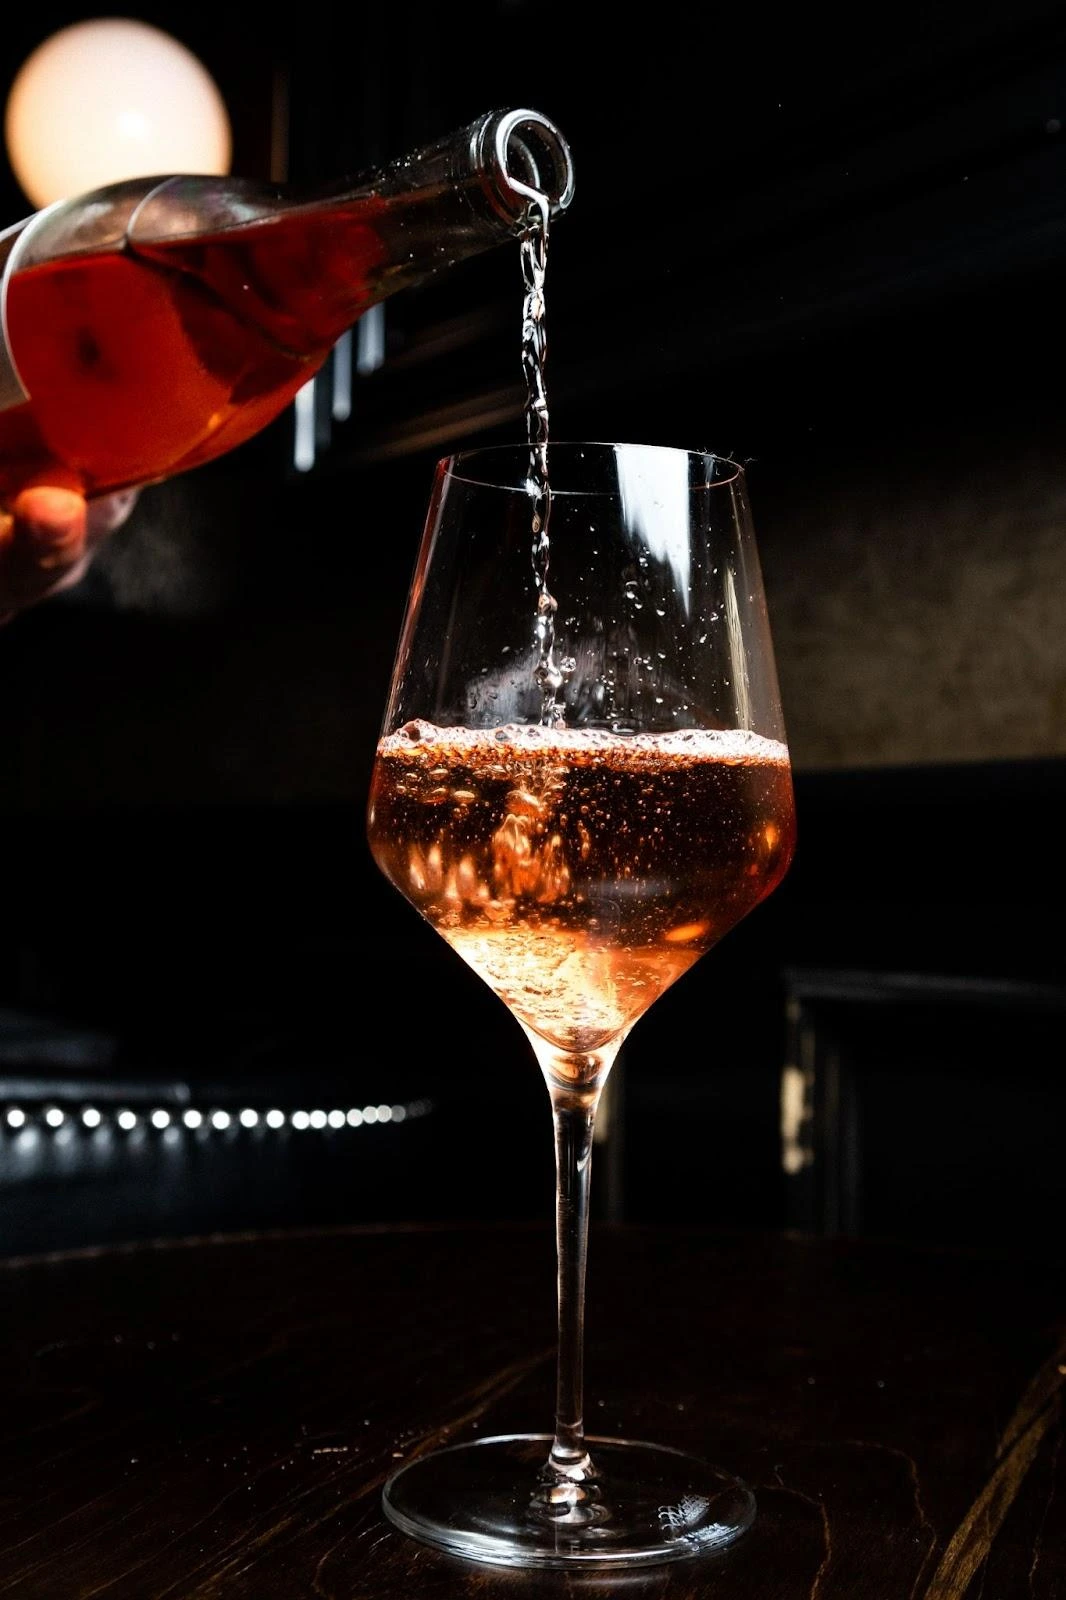 The most important server etiquette tips — serving wine